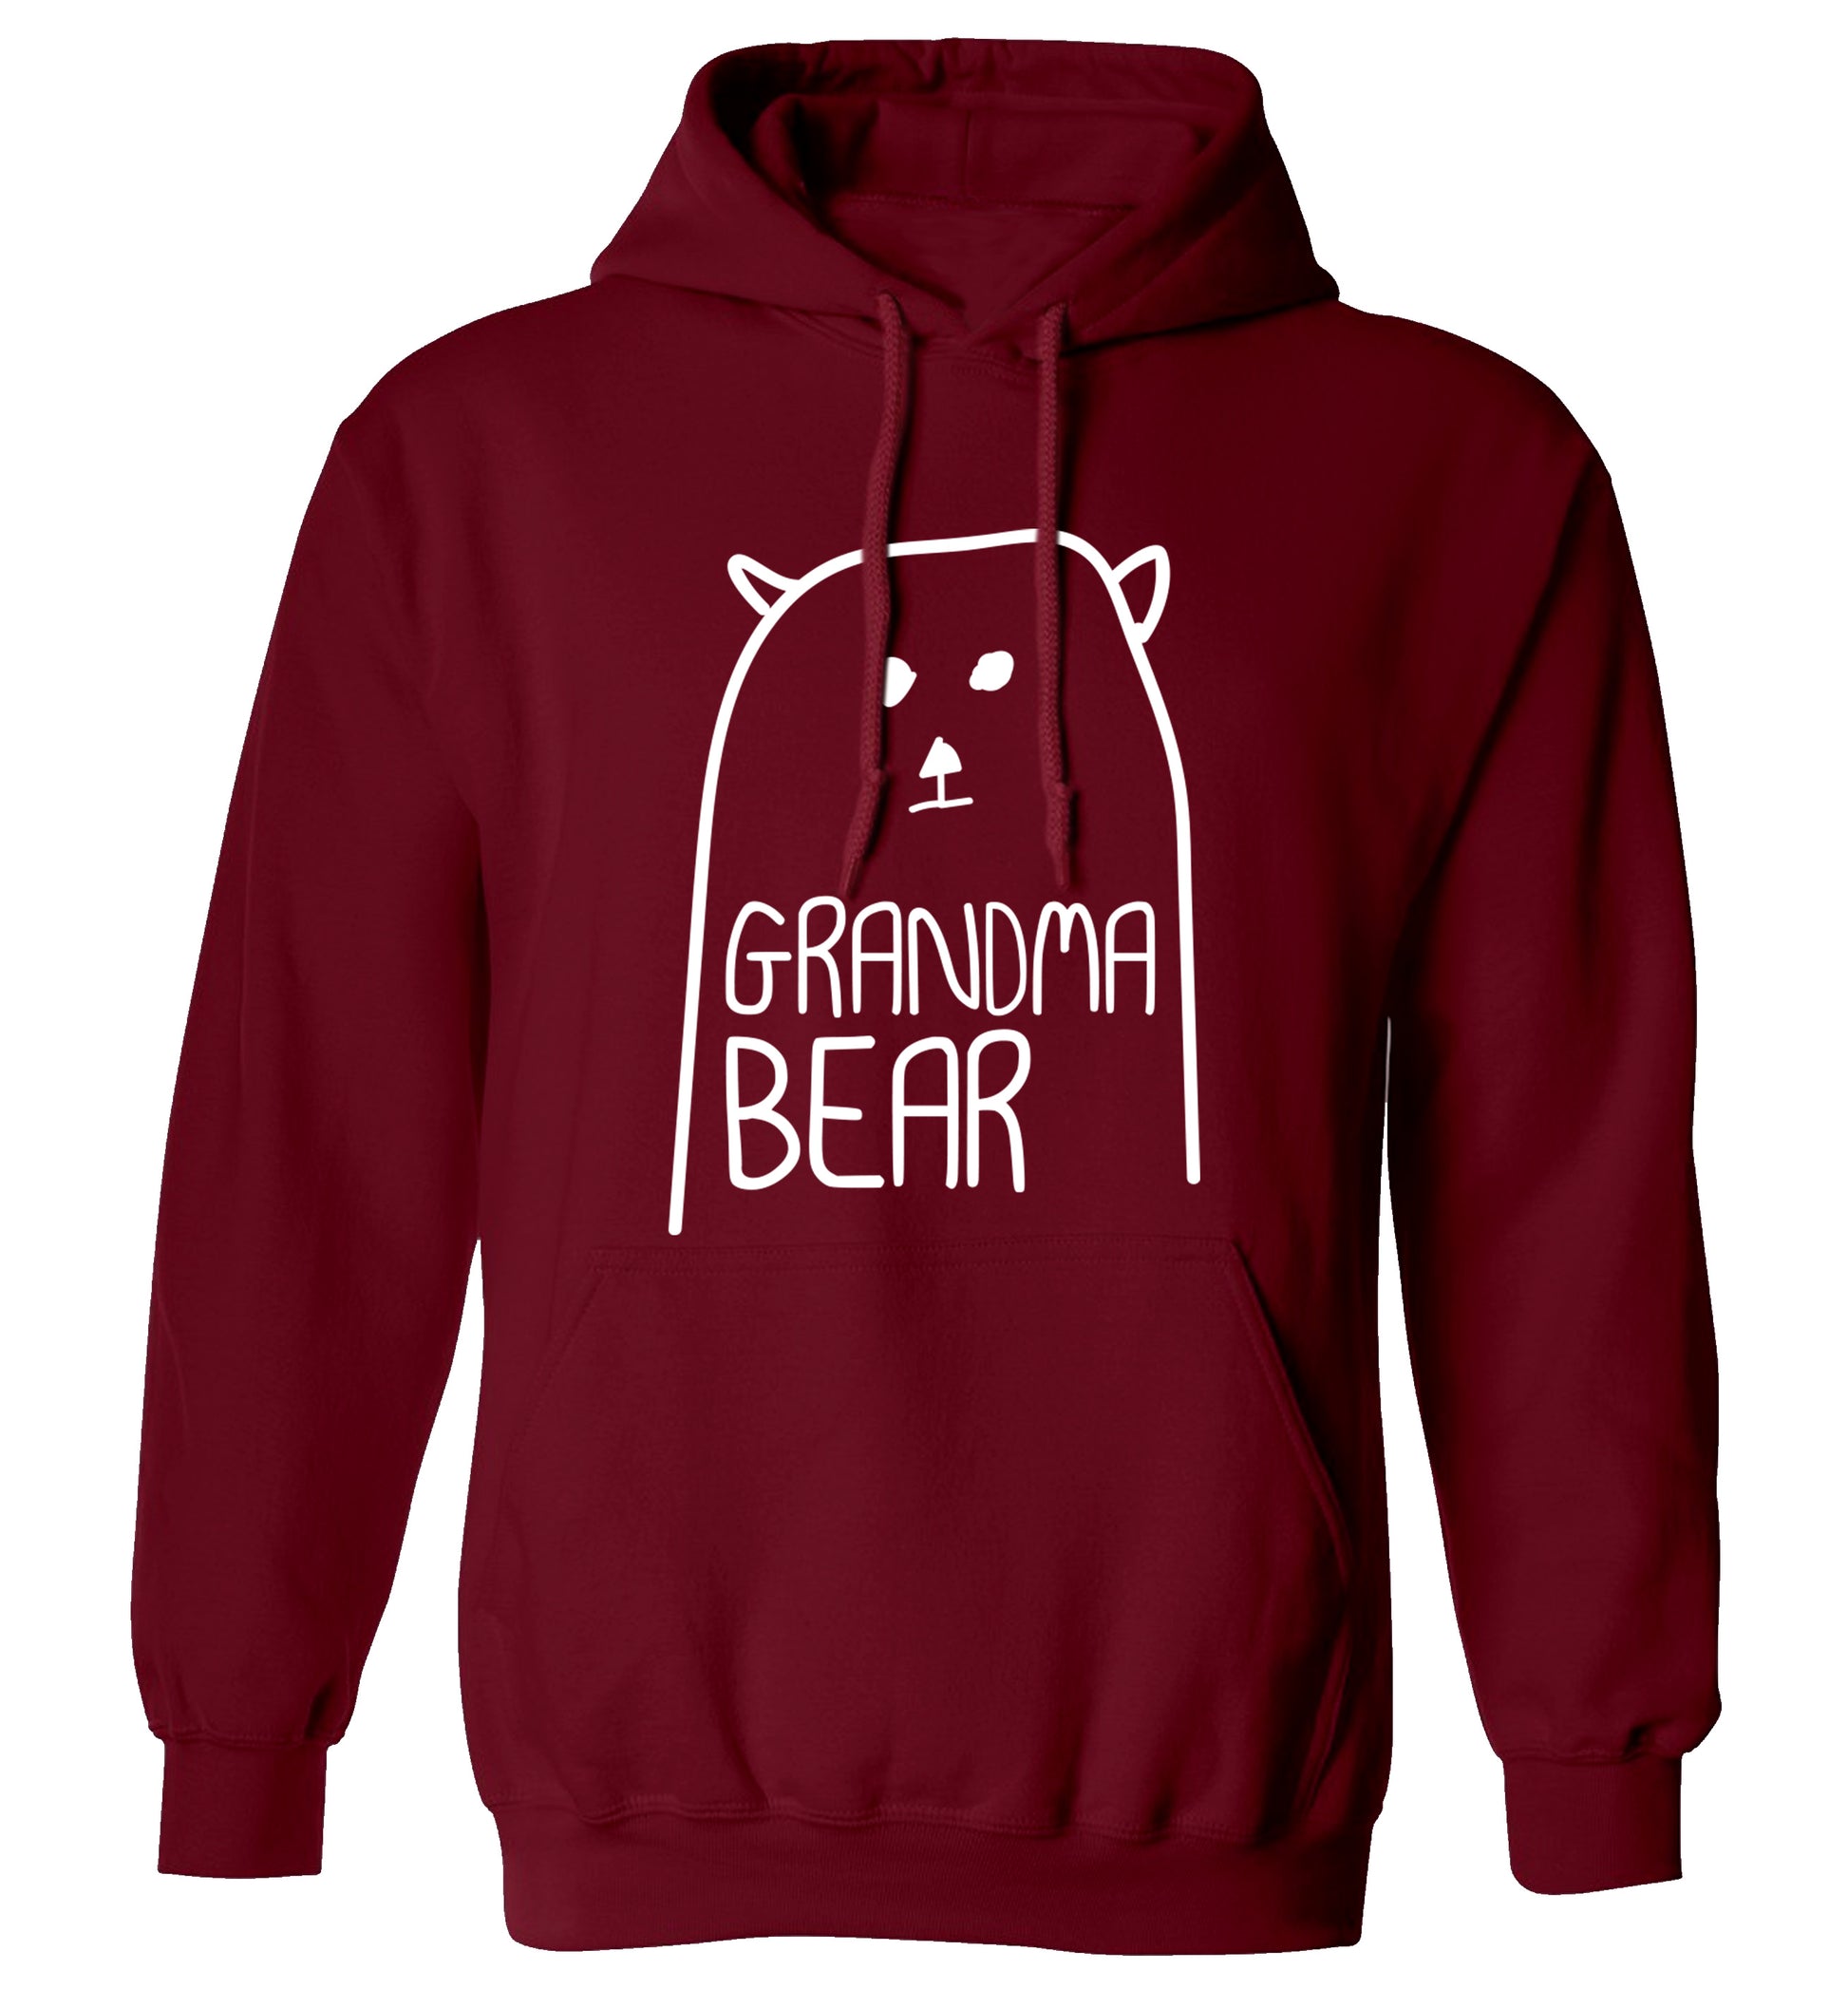 Grandma bear adults unisex maroon hoodie 2XL